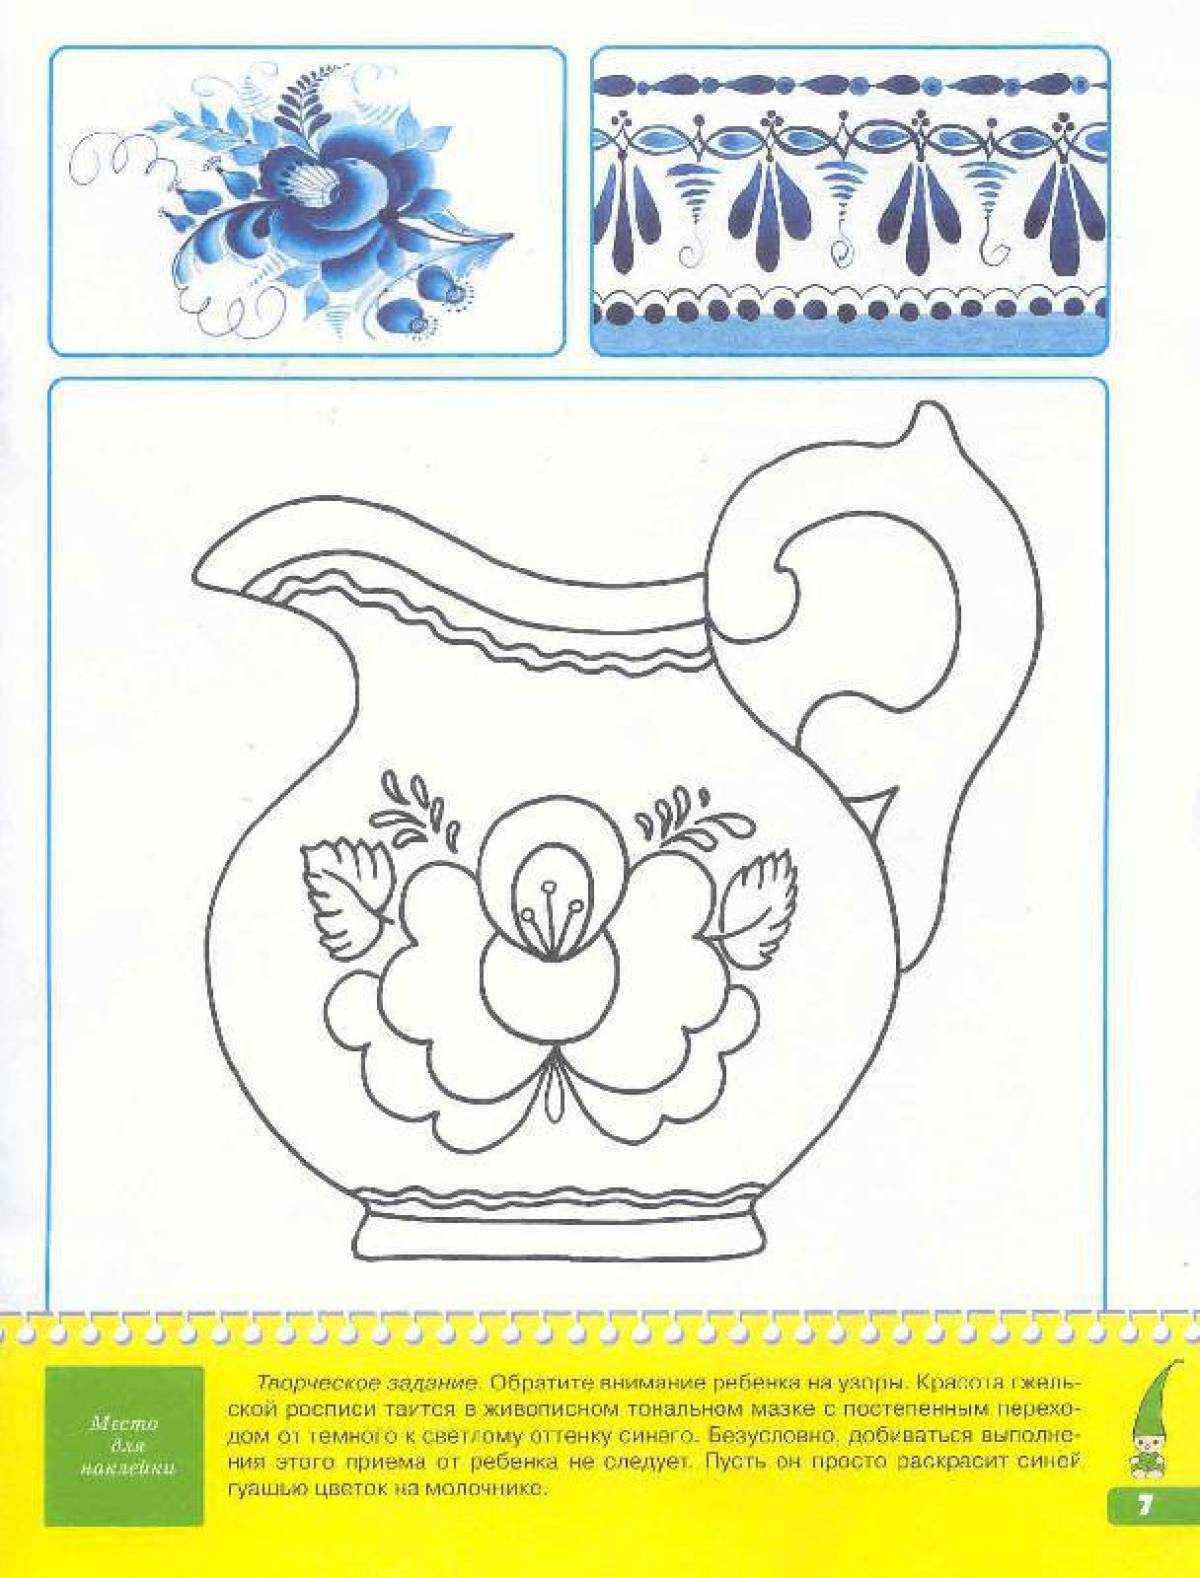 Exquisite Gzhel coloring book for schoolchildren